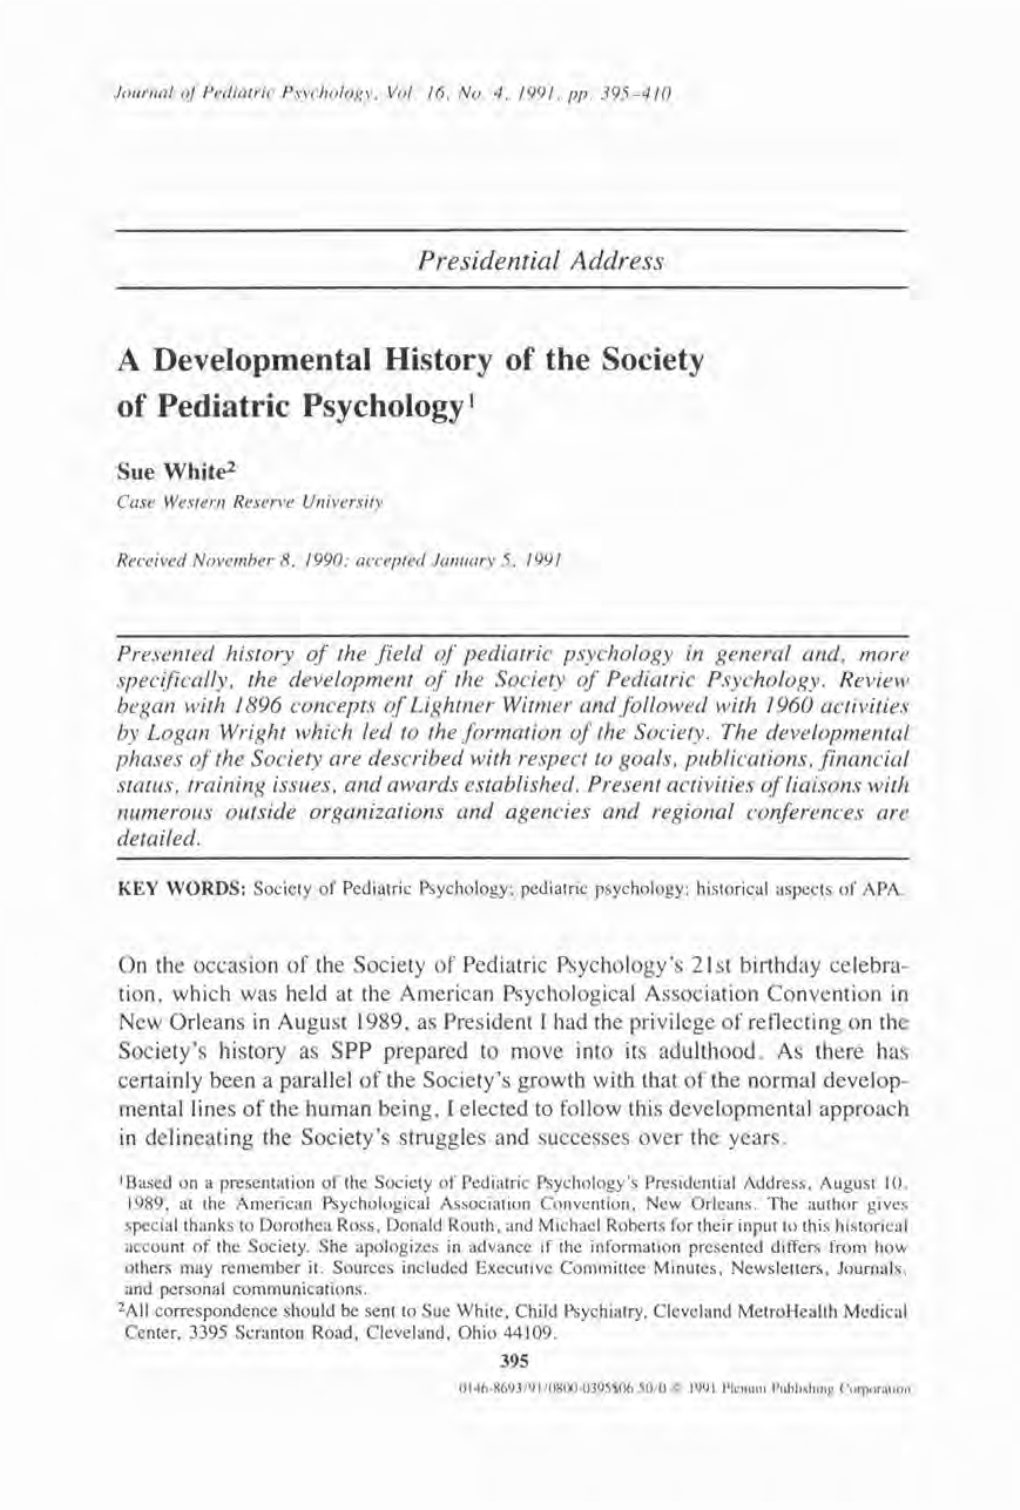 A Developmental History of the Society of Pediatric Psychology1